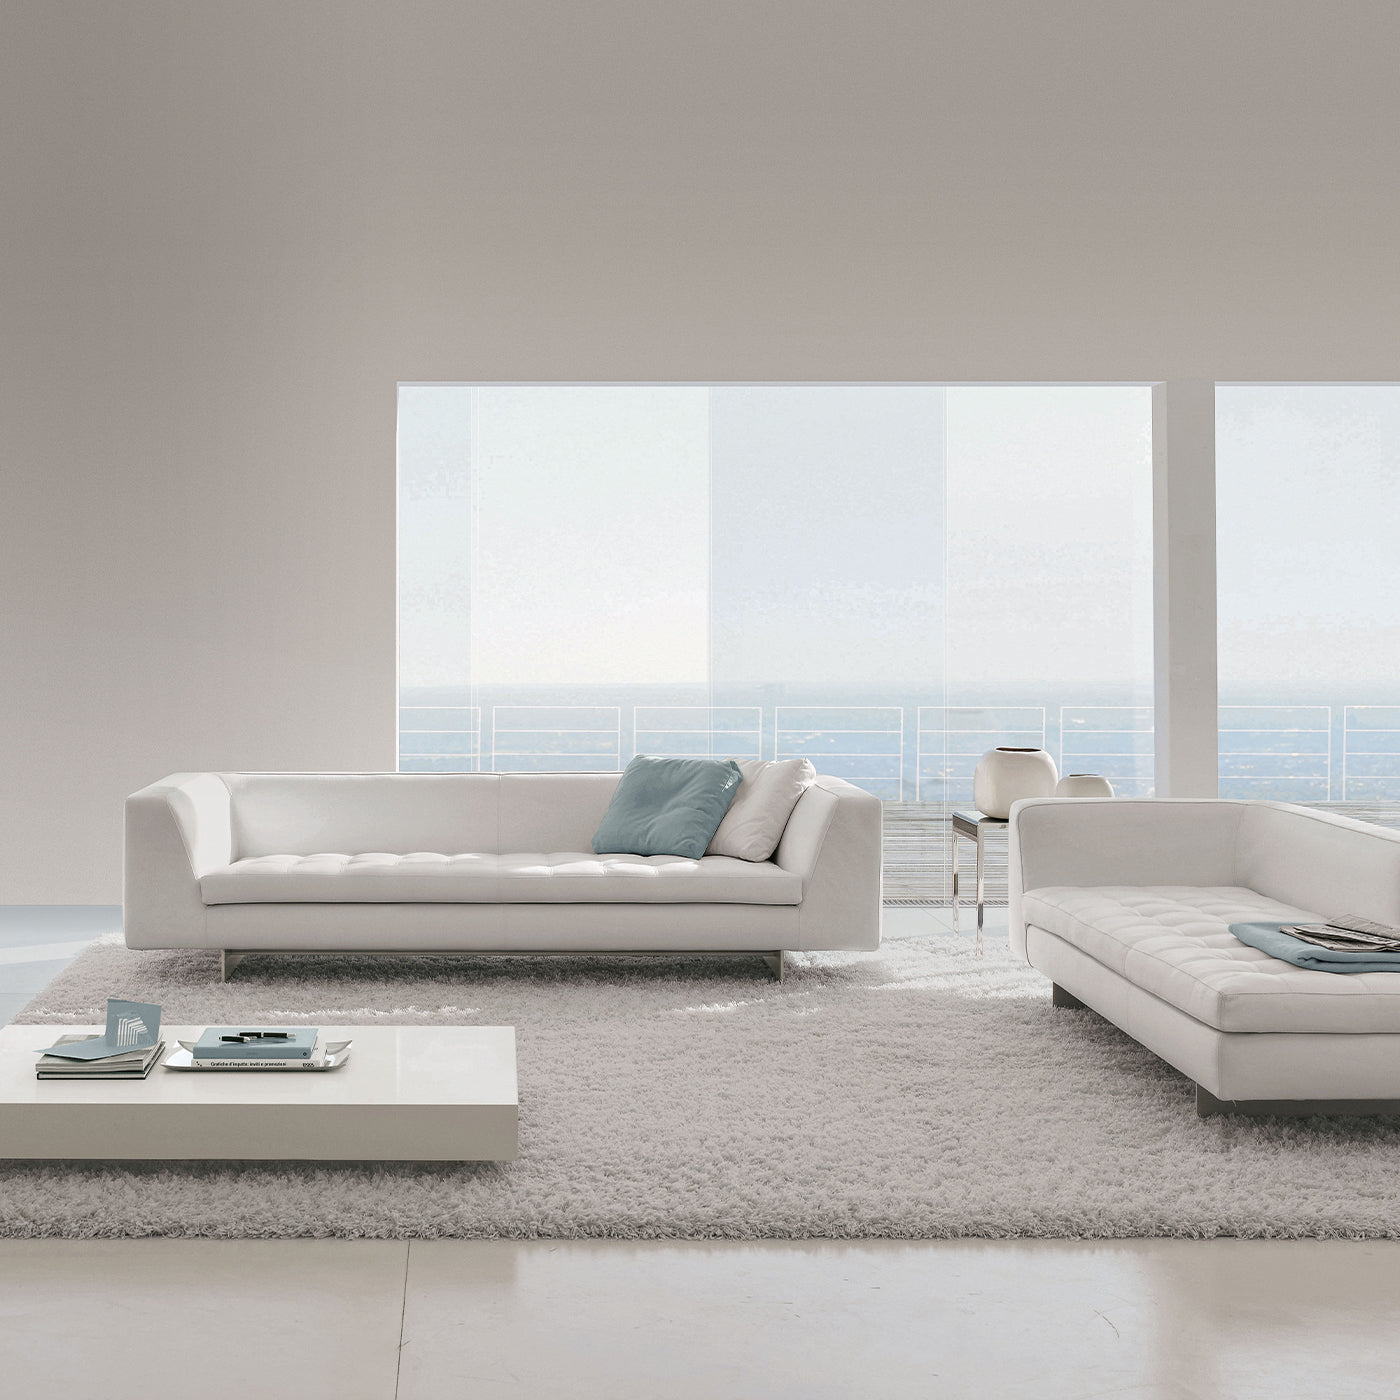 Haero White-Leather Sofa by Giuseppe Bavuso - Alternative view 3